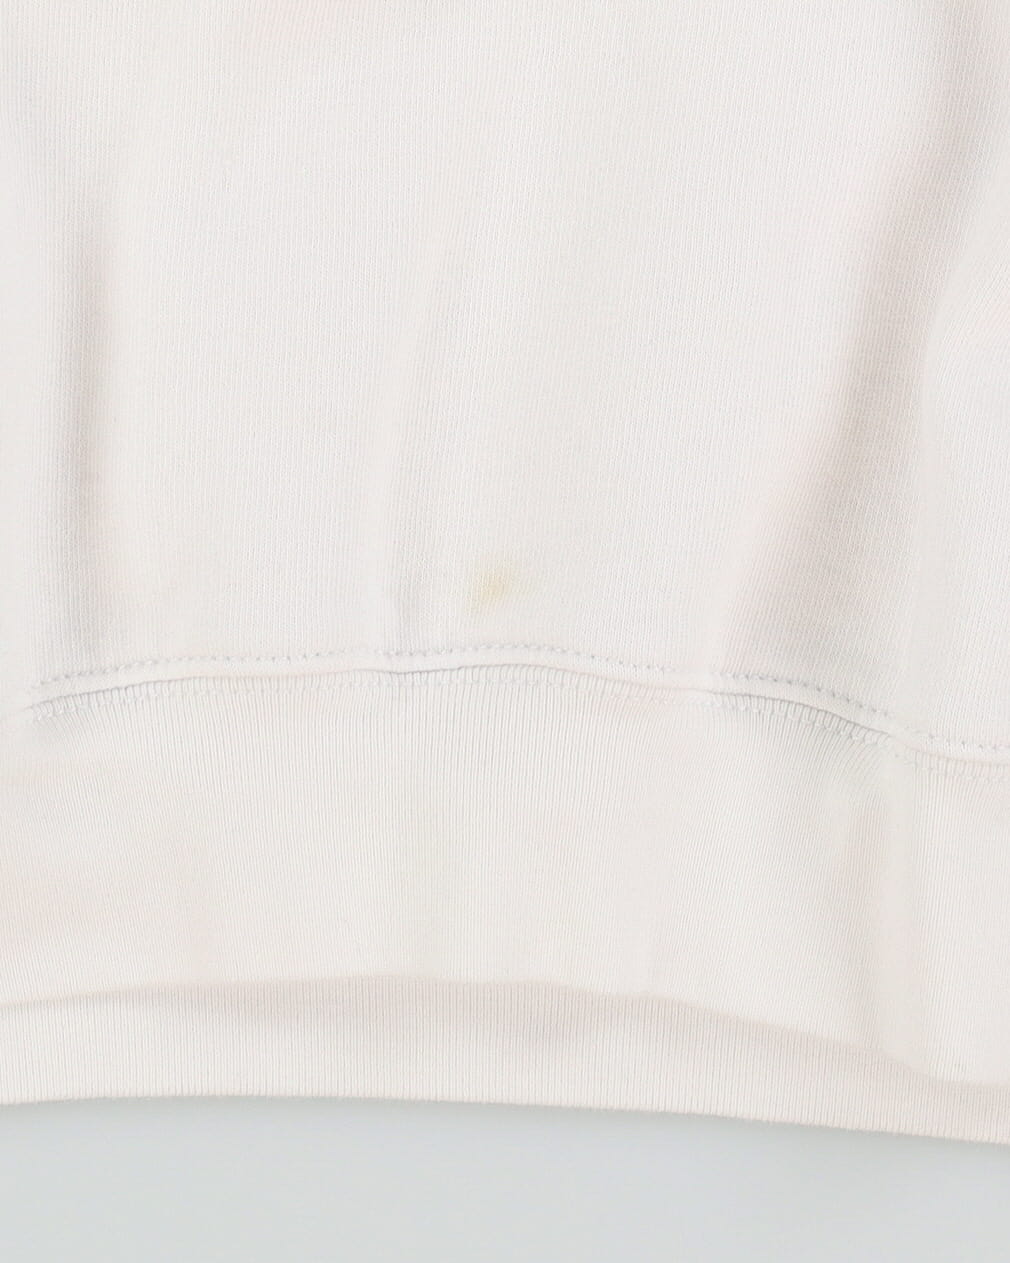 Burberry White Nova Check Sleeve Patterned Sweatshirt - M